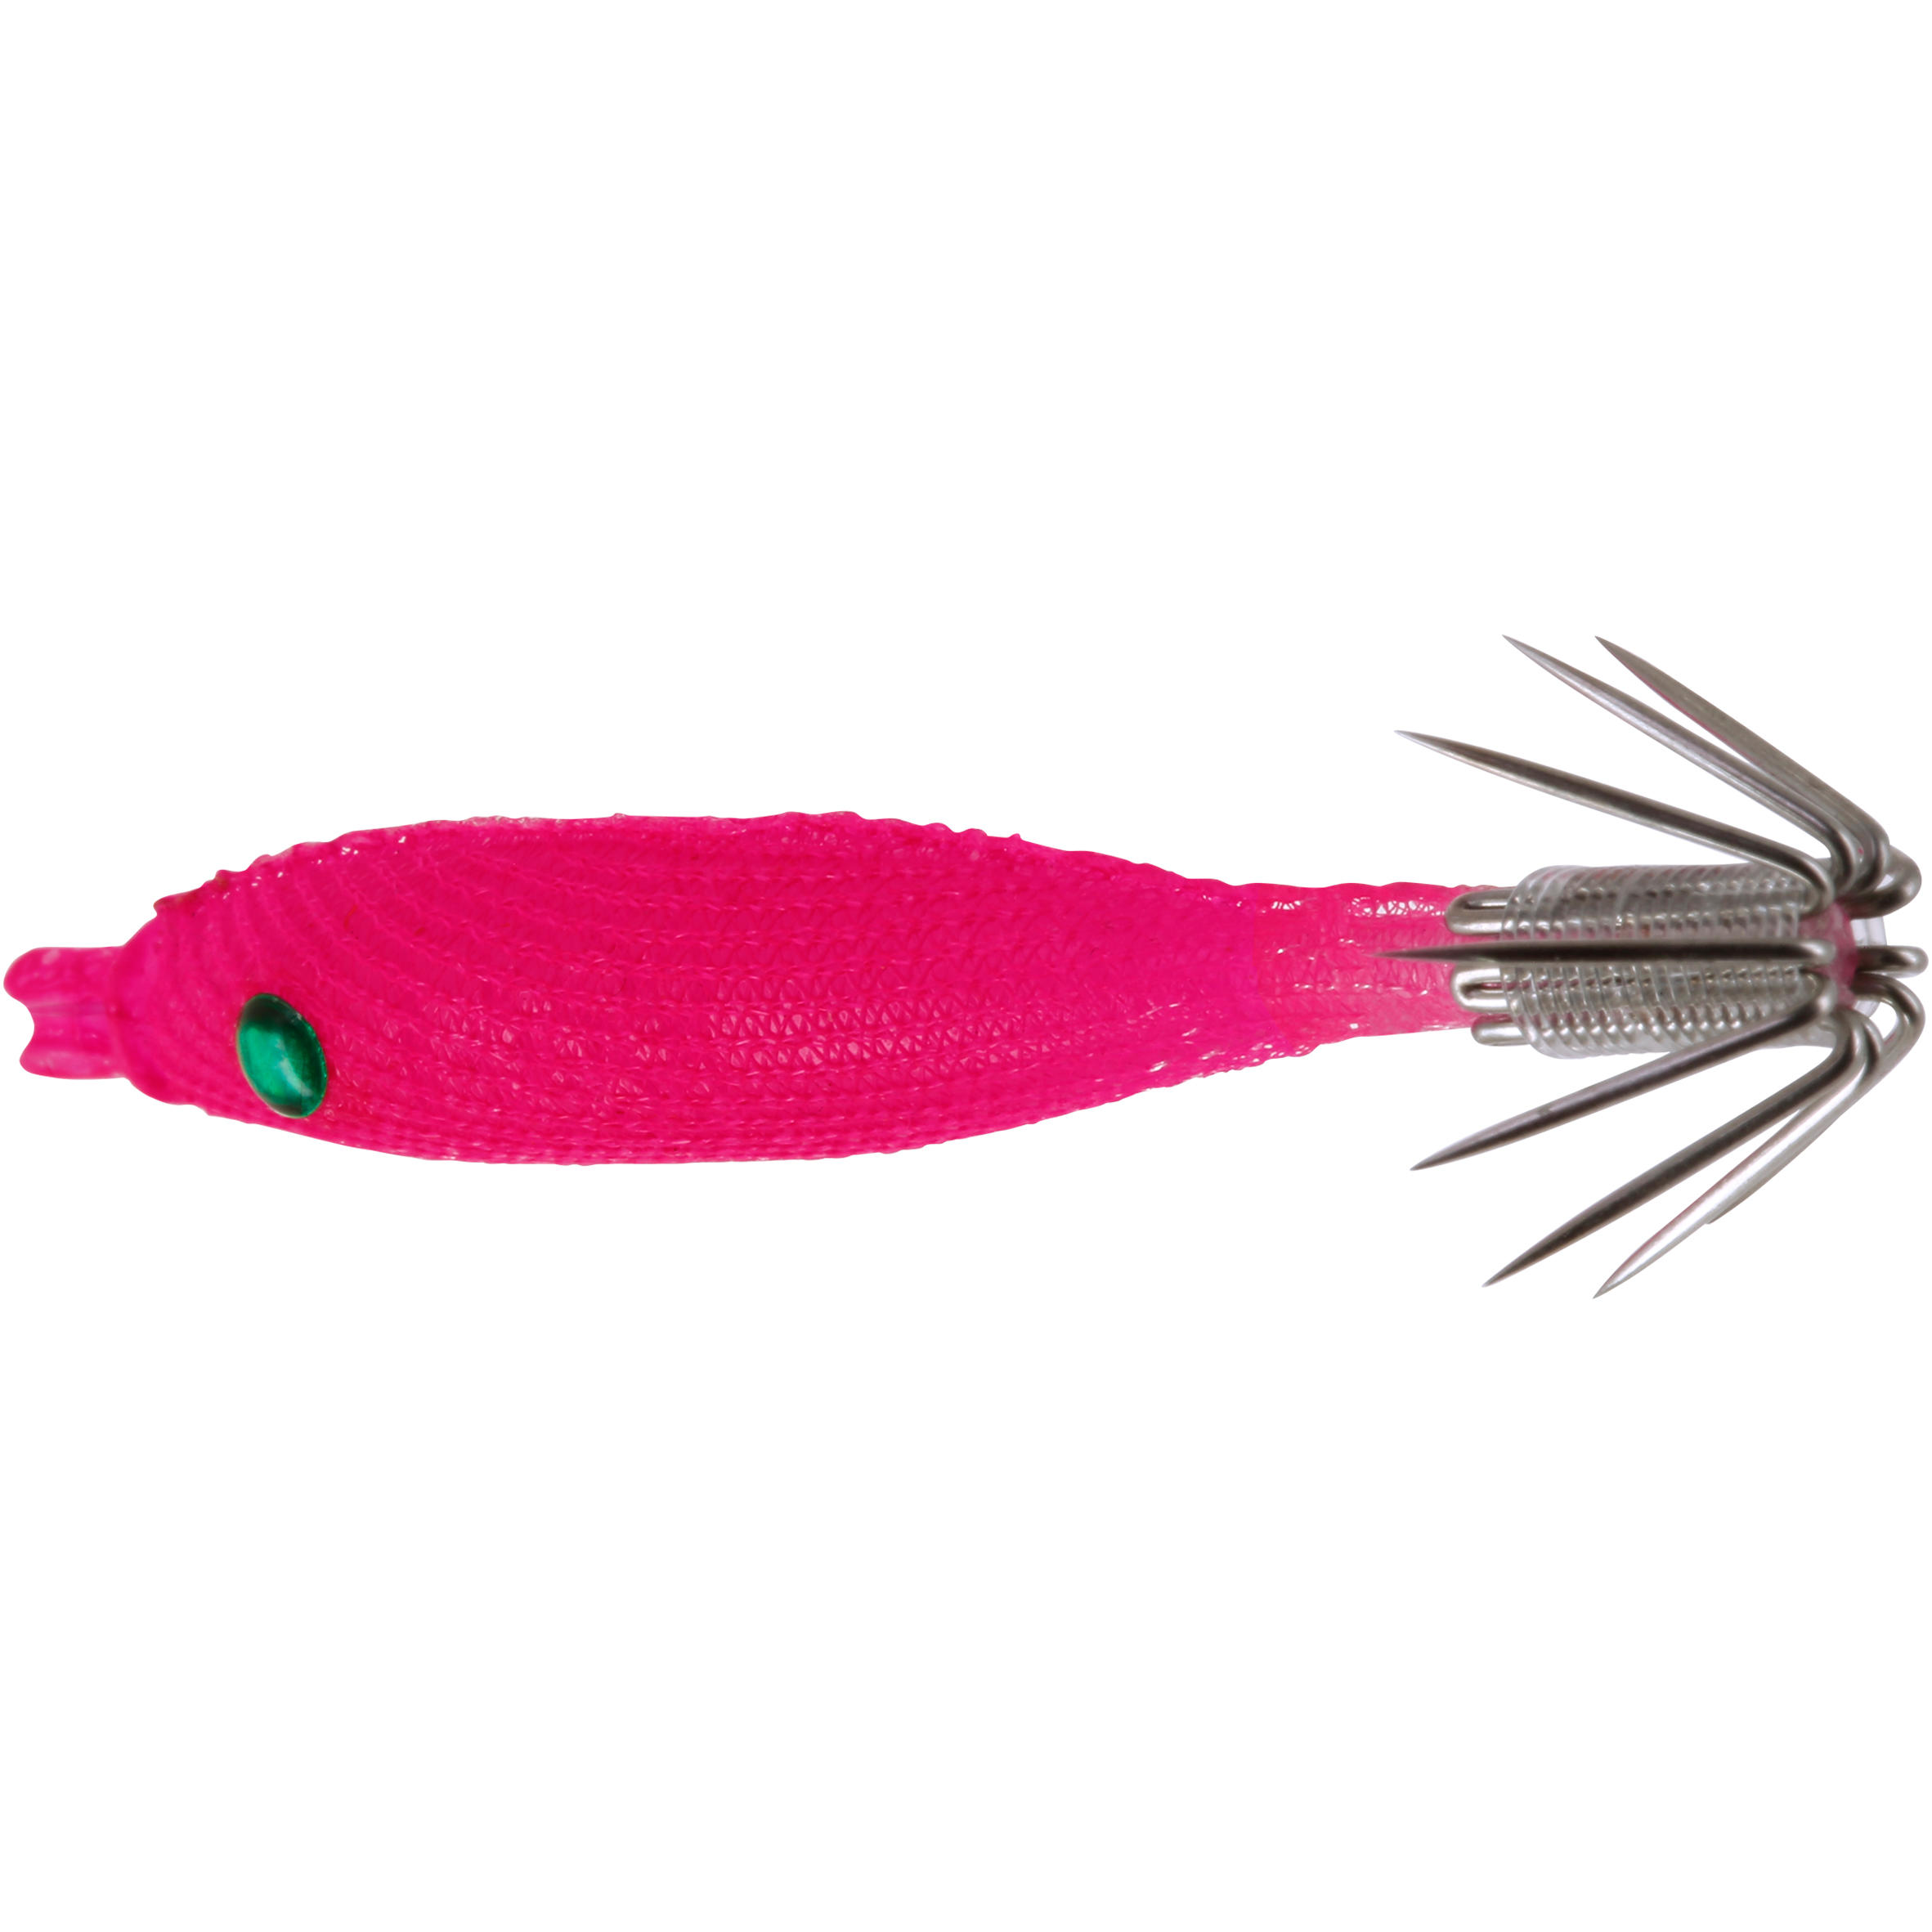 EBIKA soft 1.8 50 pink cuttlefish/squid fishing jig 3/10